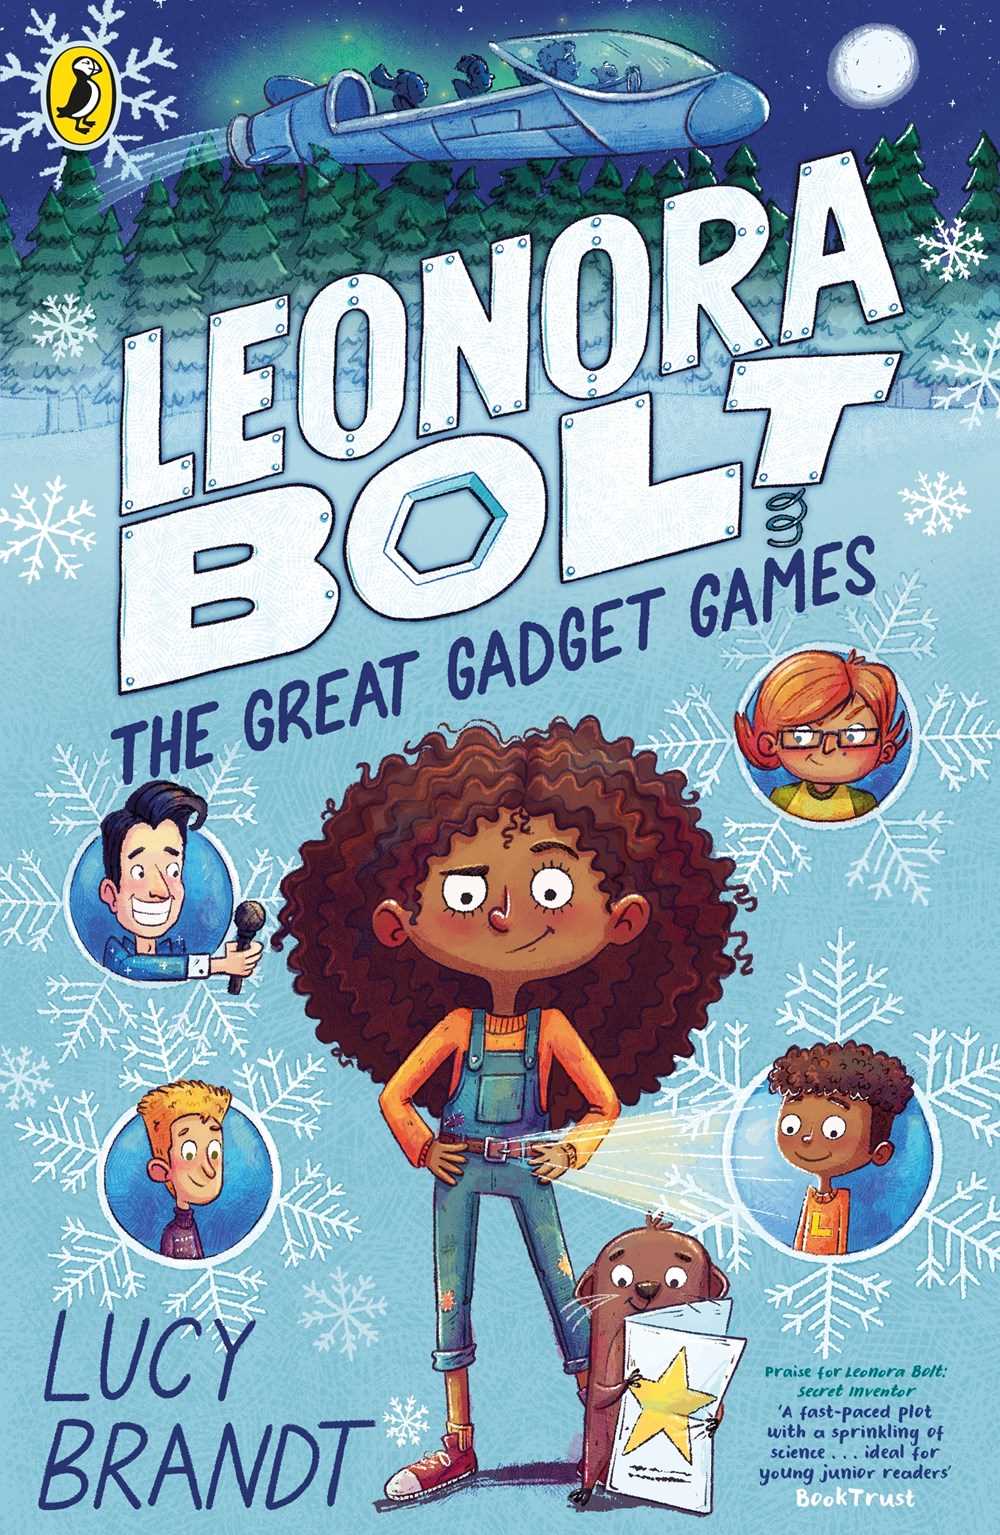 The Great Gadget Games (Leonora Bolt)